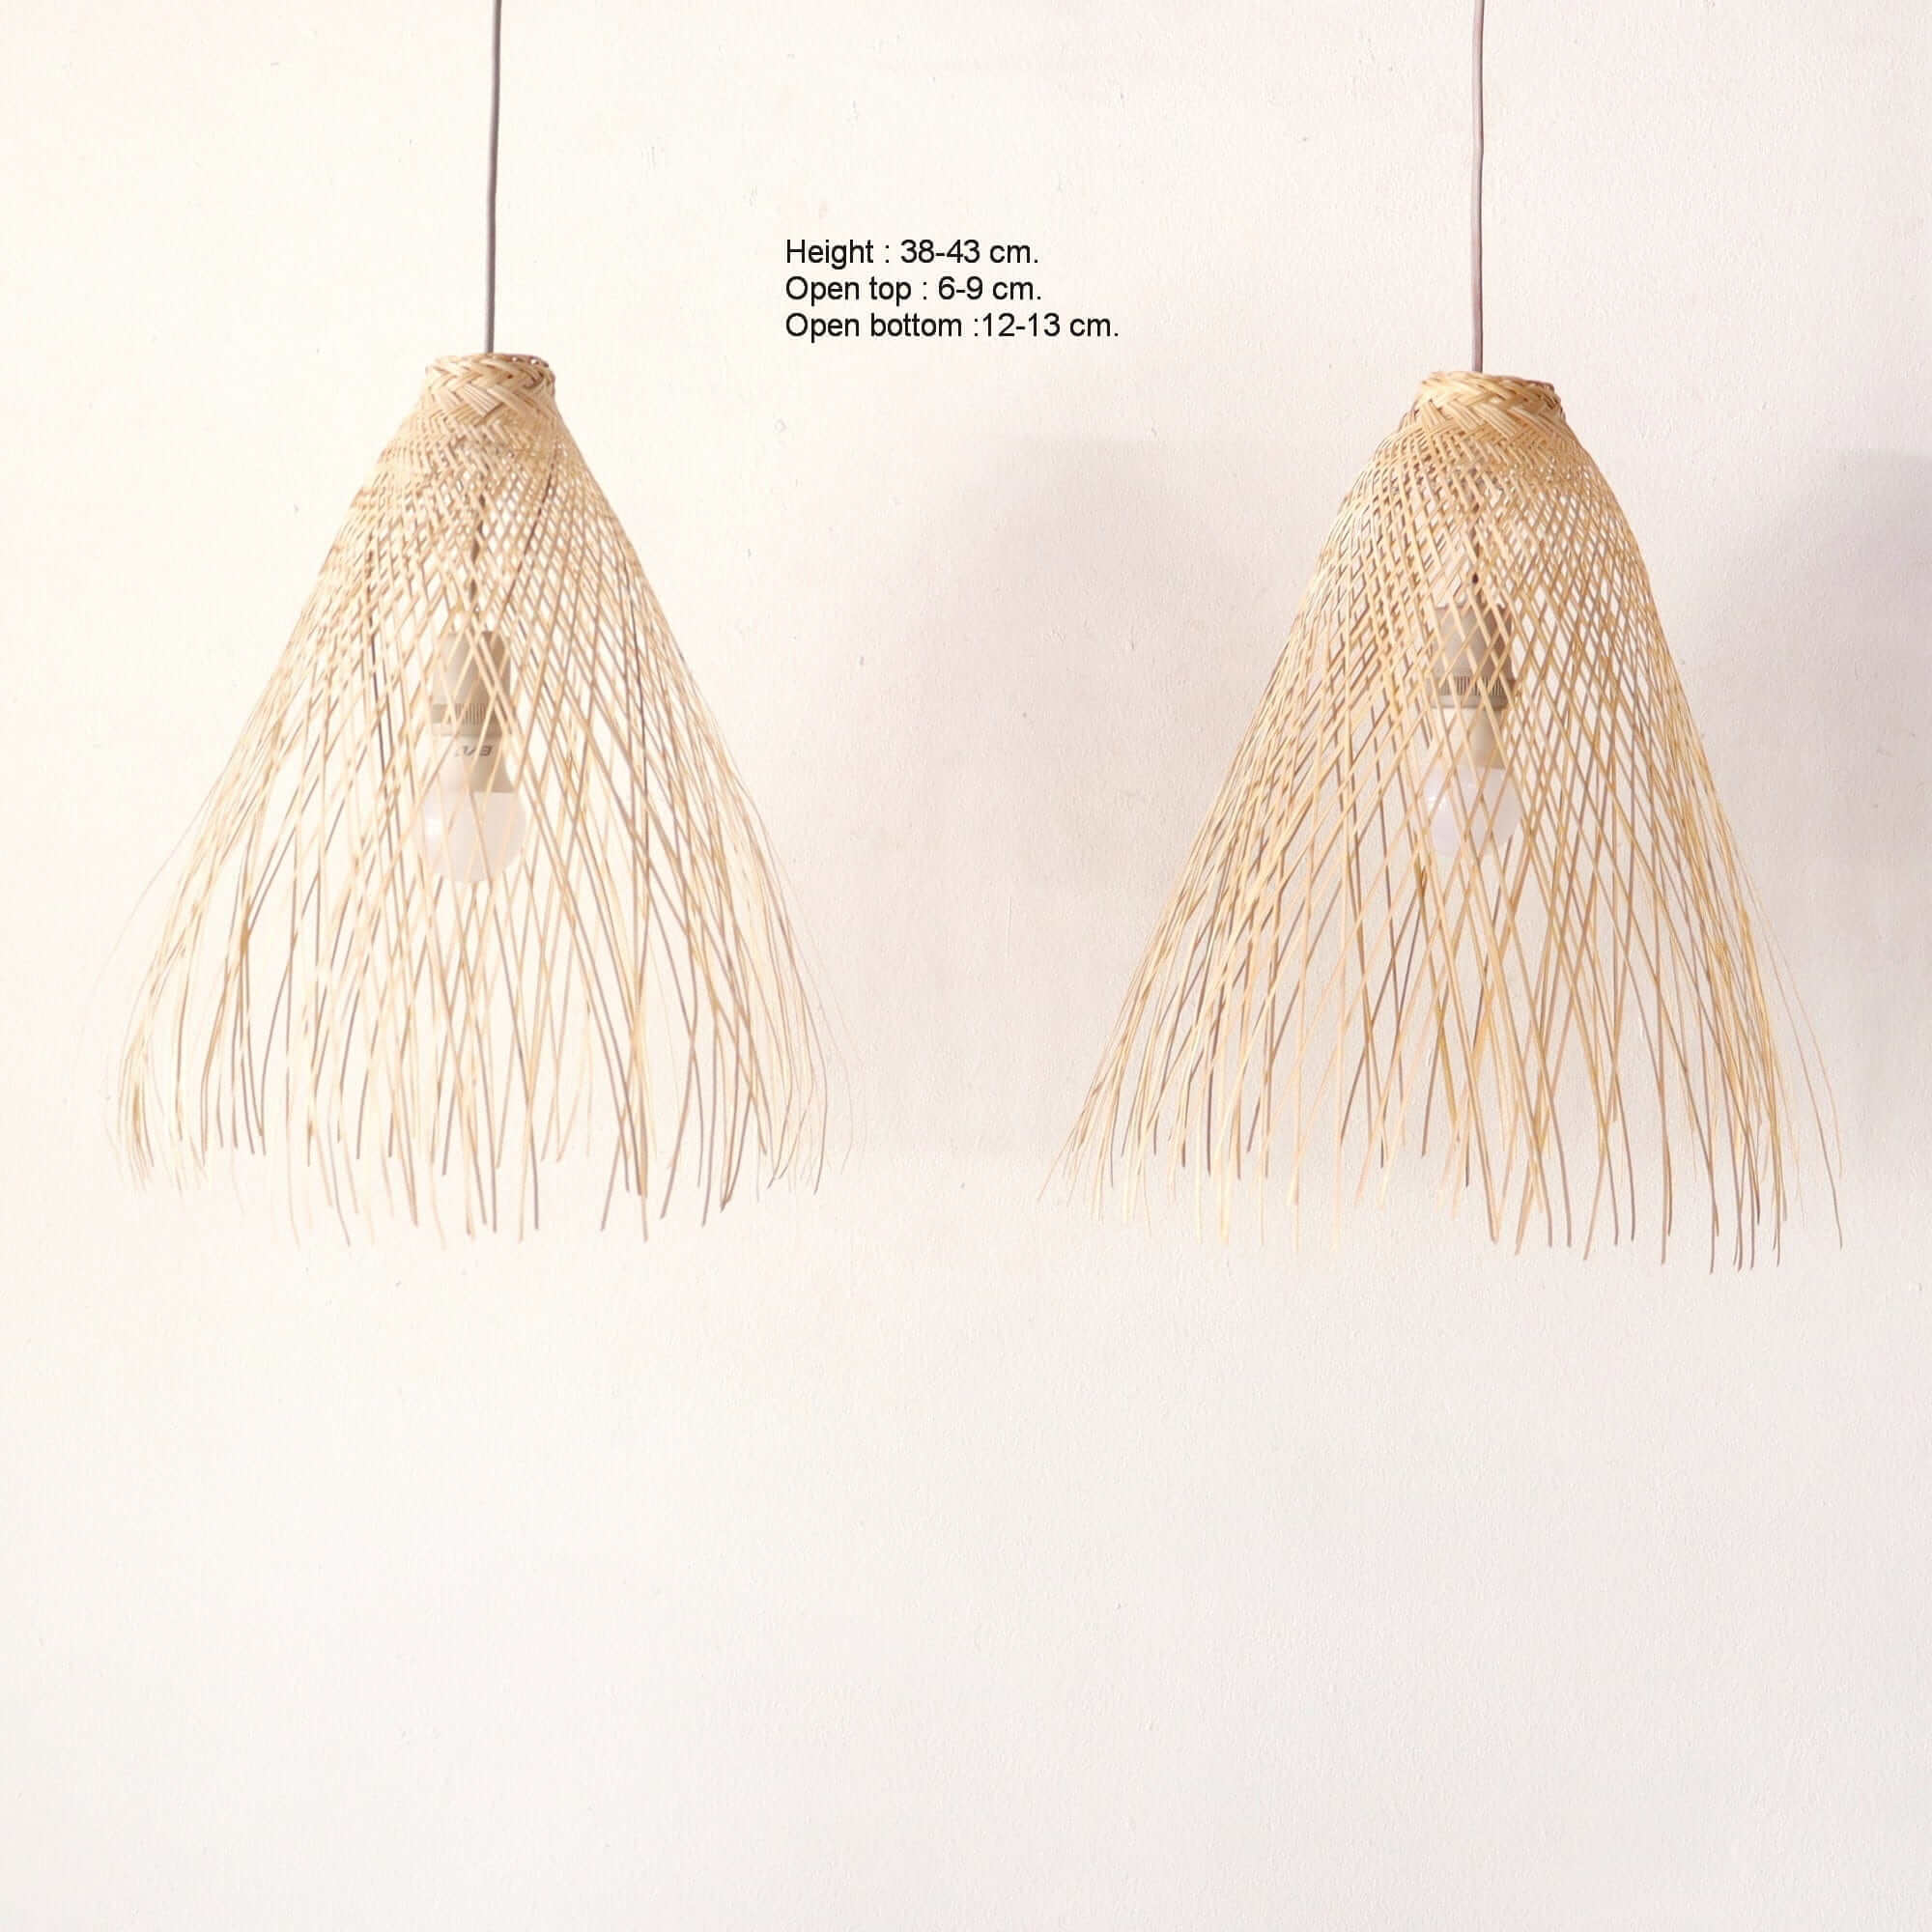 MEY TI NEE - Bamboo Pendant Light